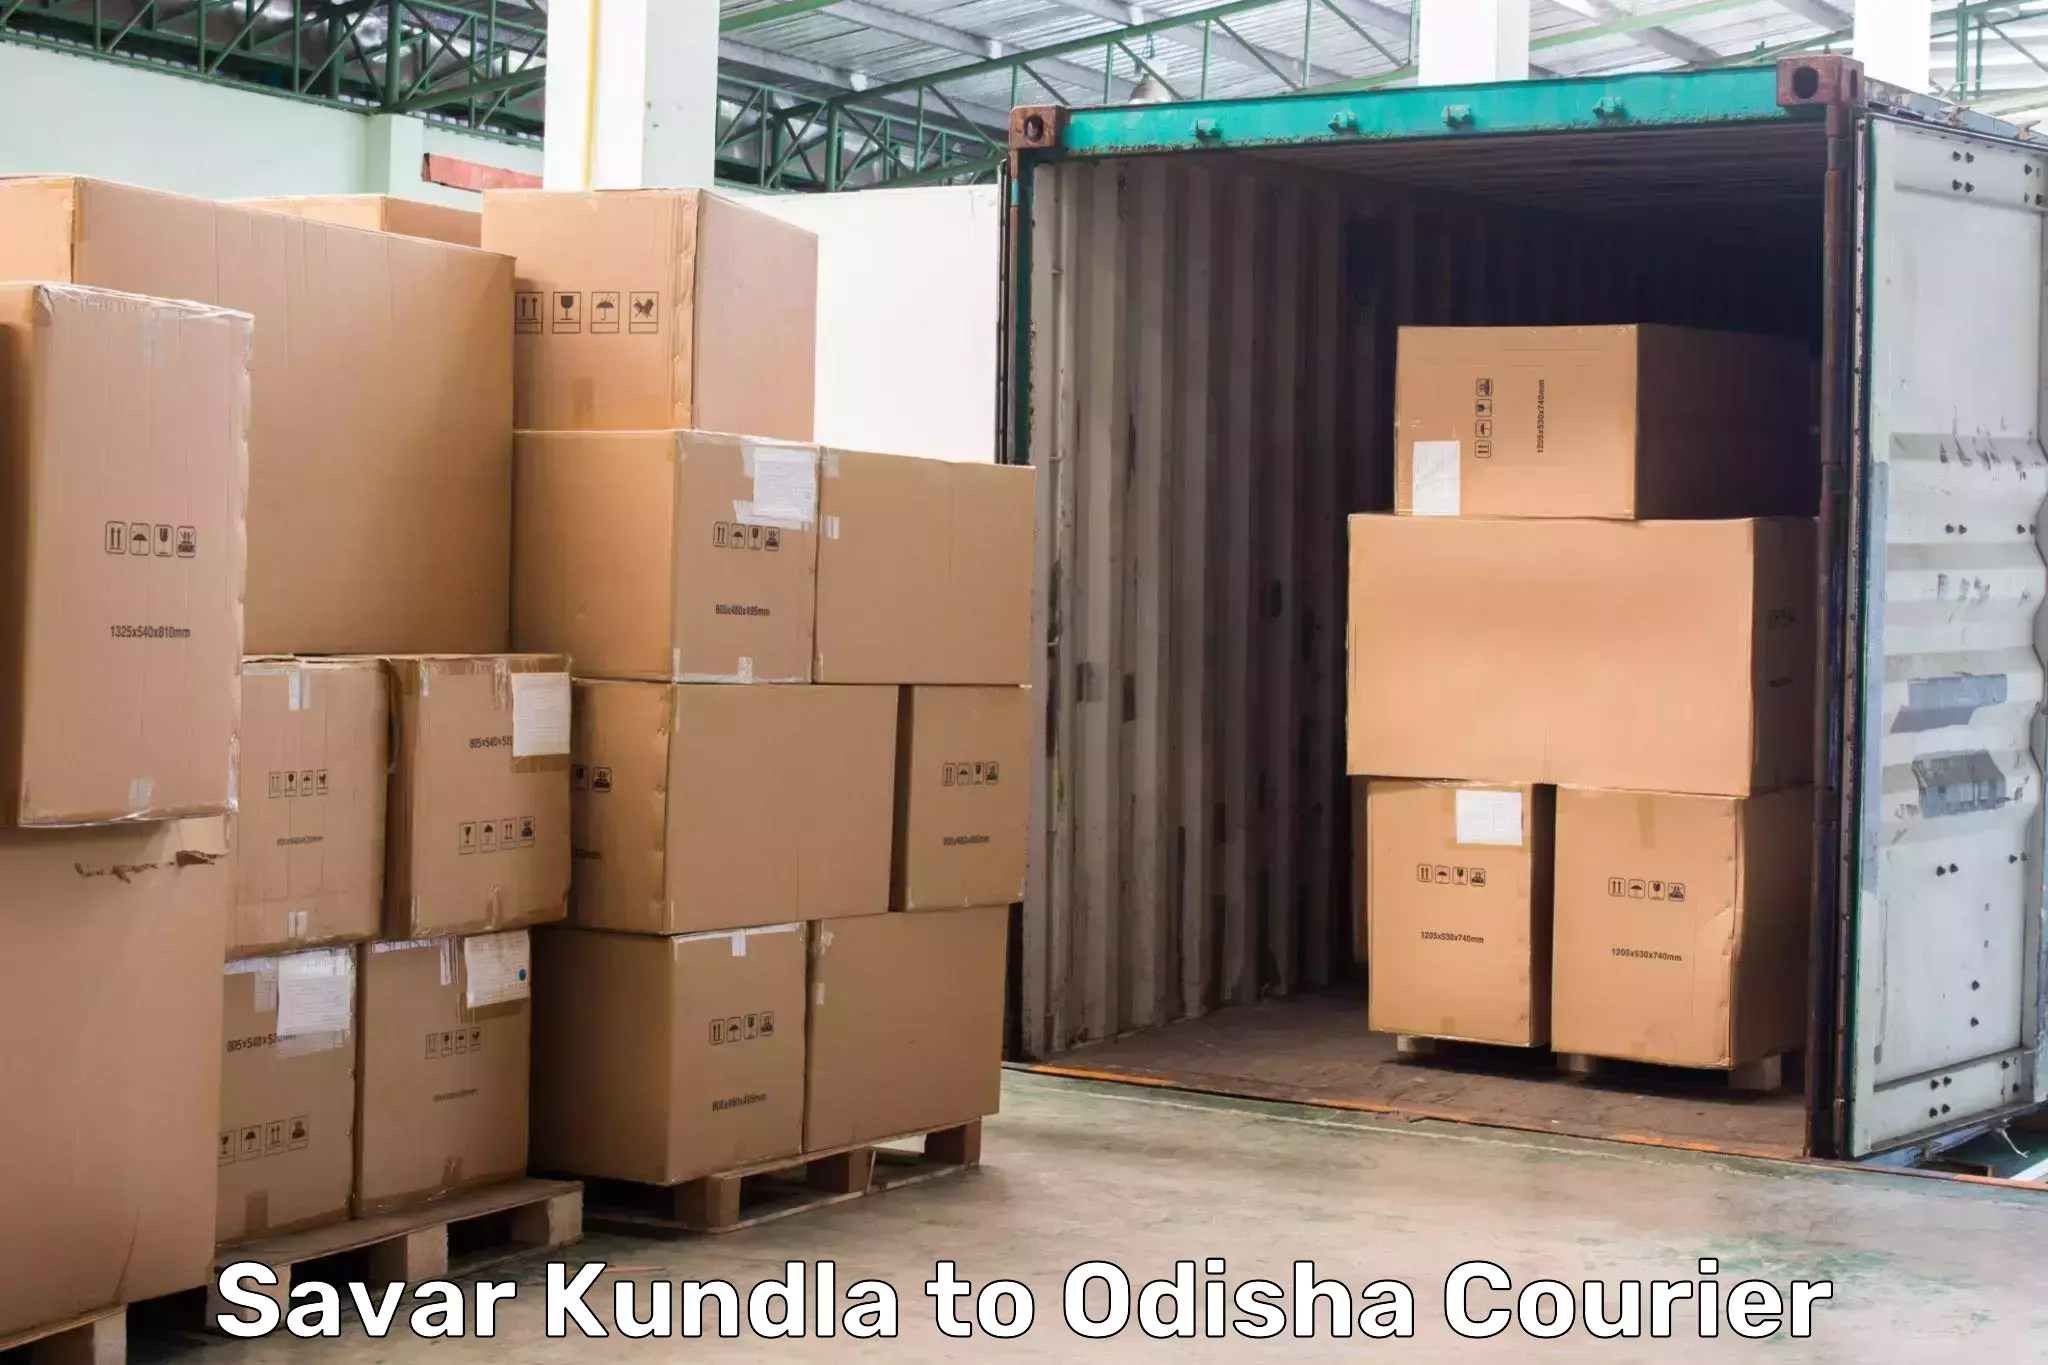 Courier service partnerships Savar Kundla to Balikuda